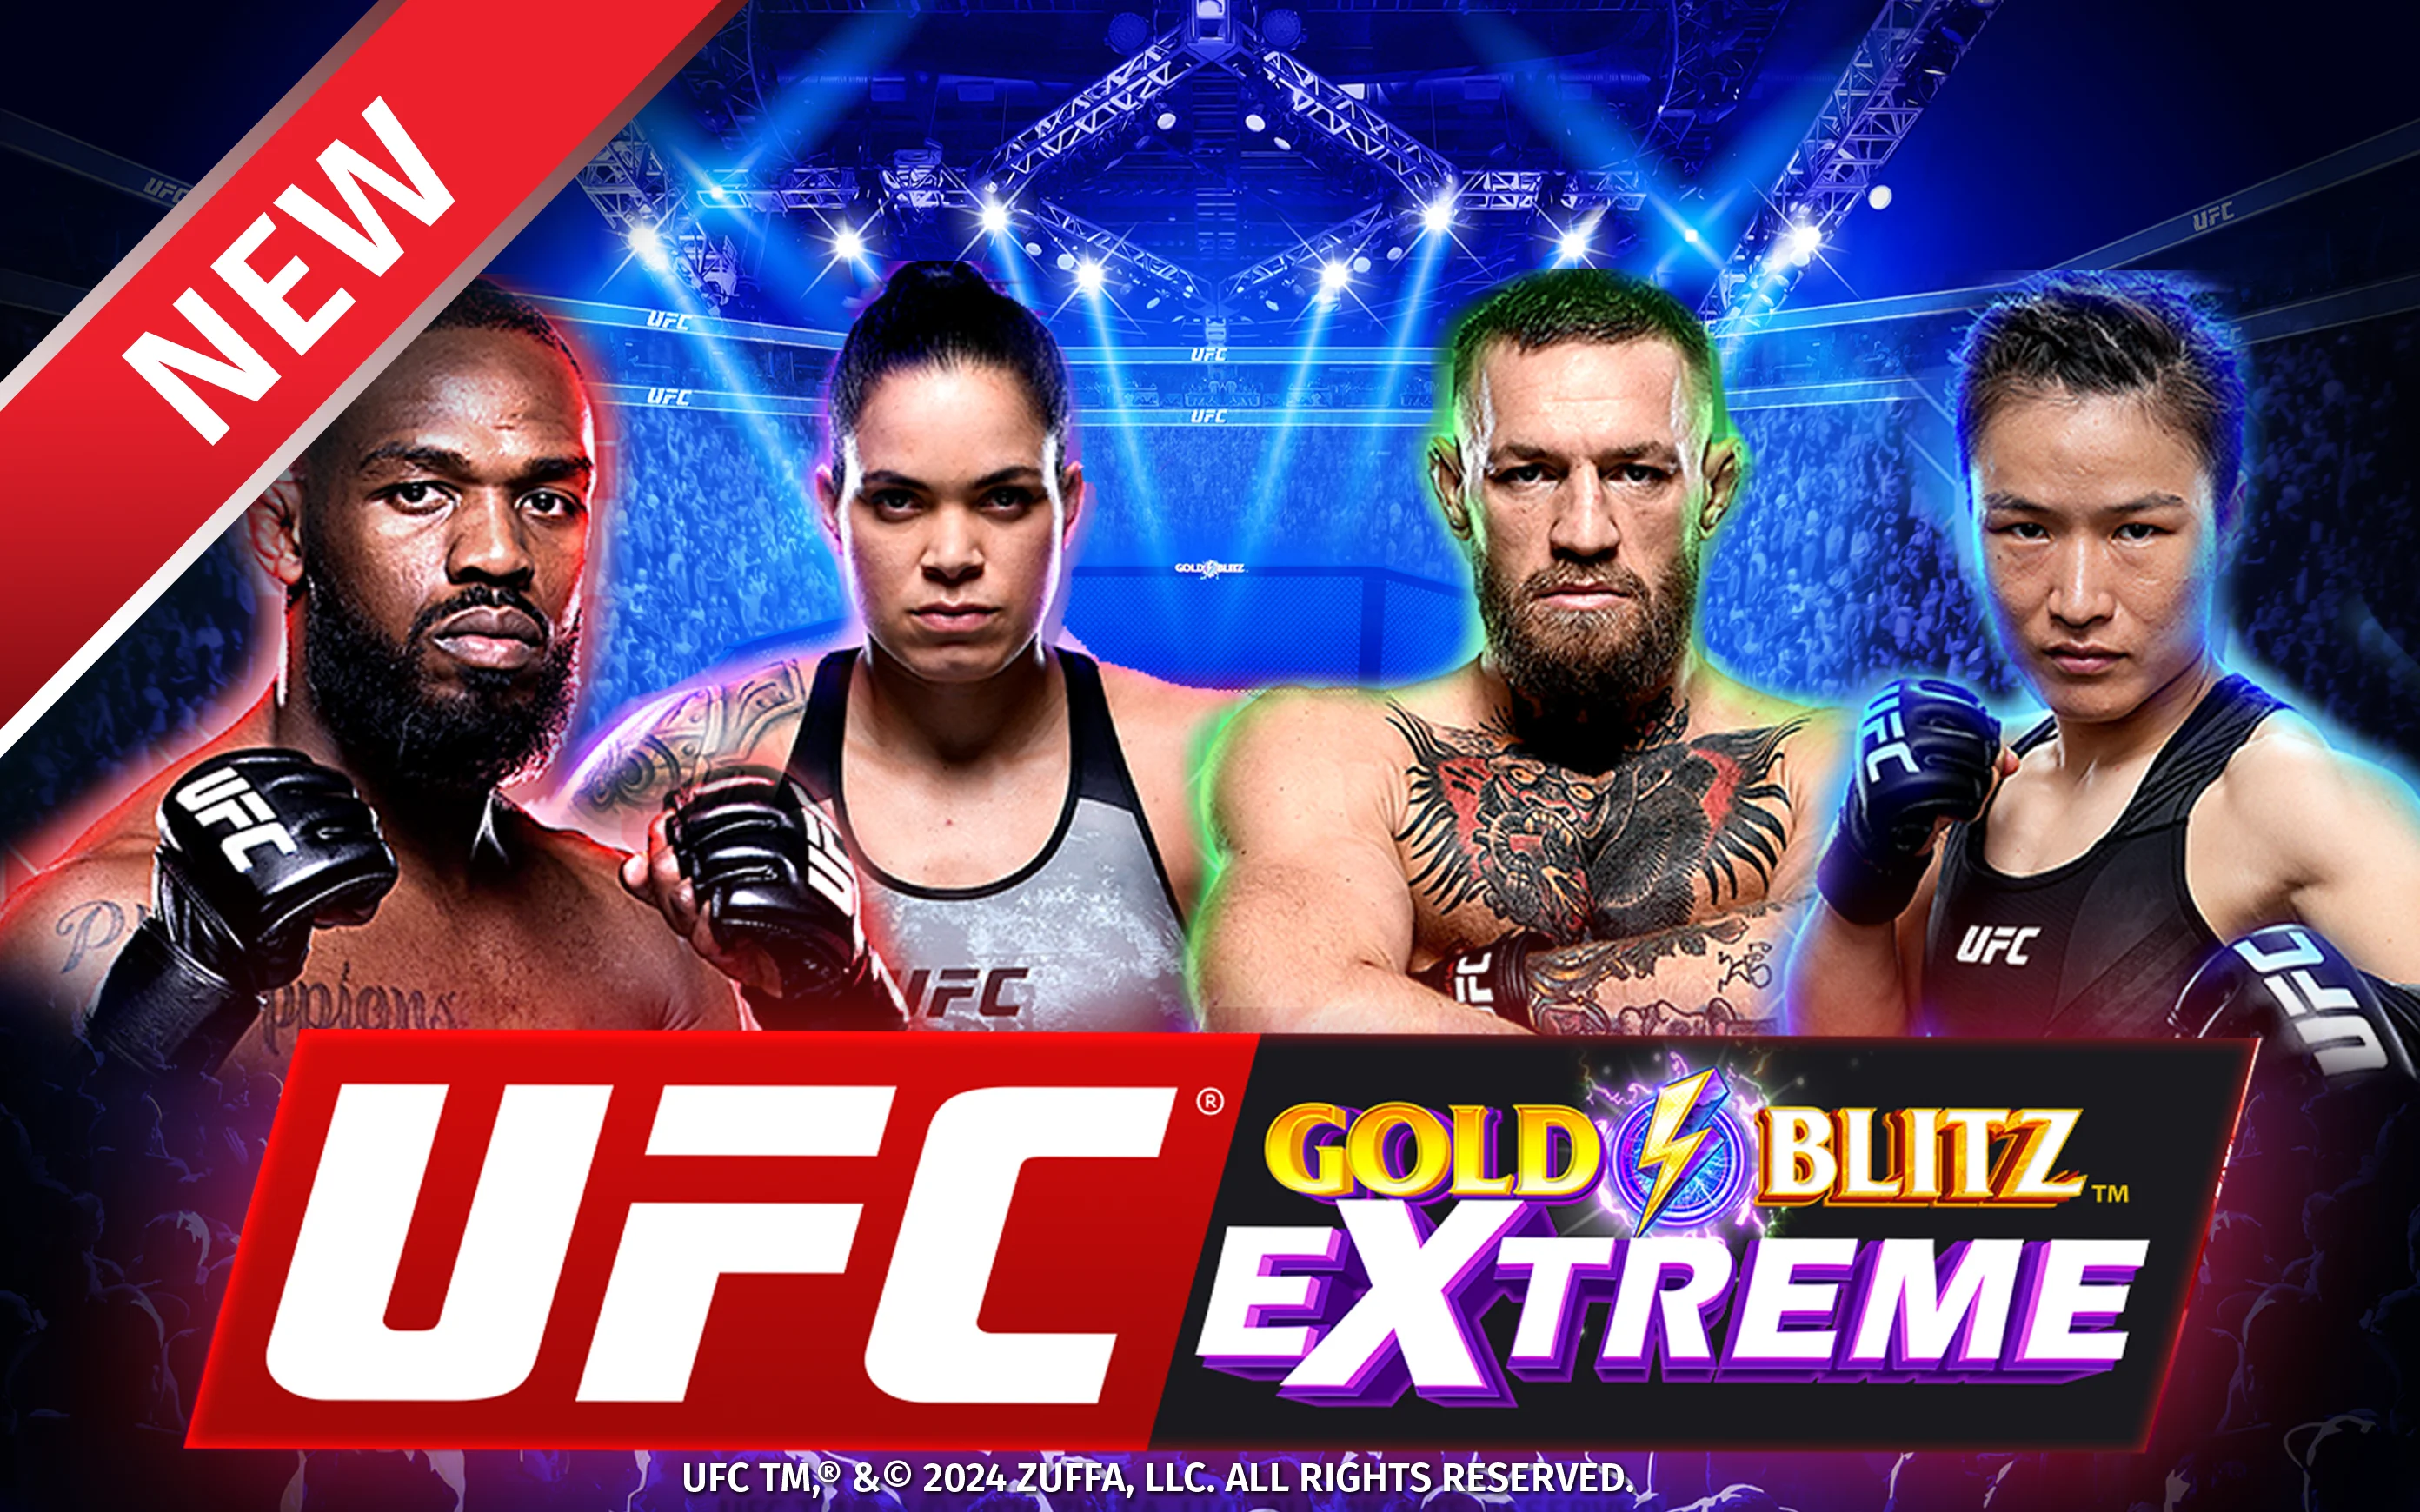 Gioca a UFC Gold Blitz Extreme™ sul casino online Starcasino.be